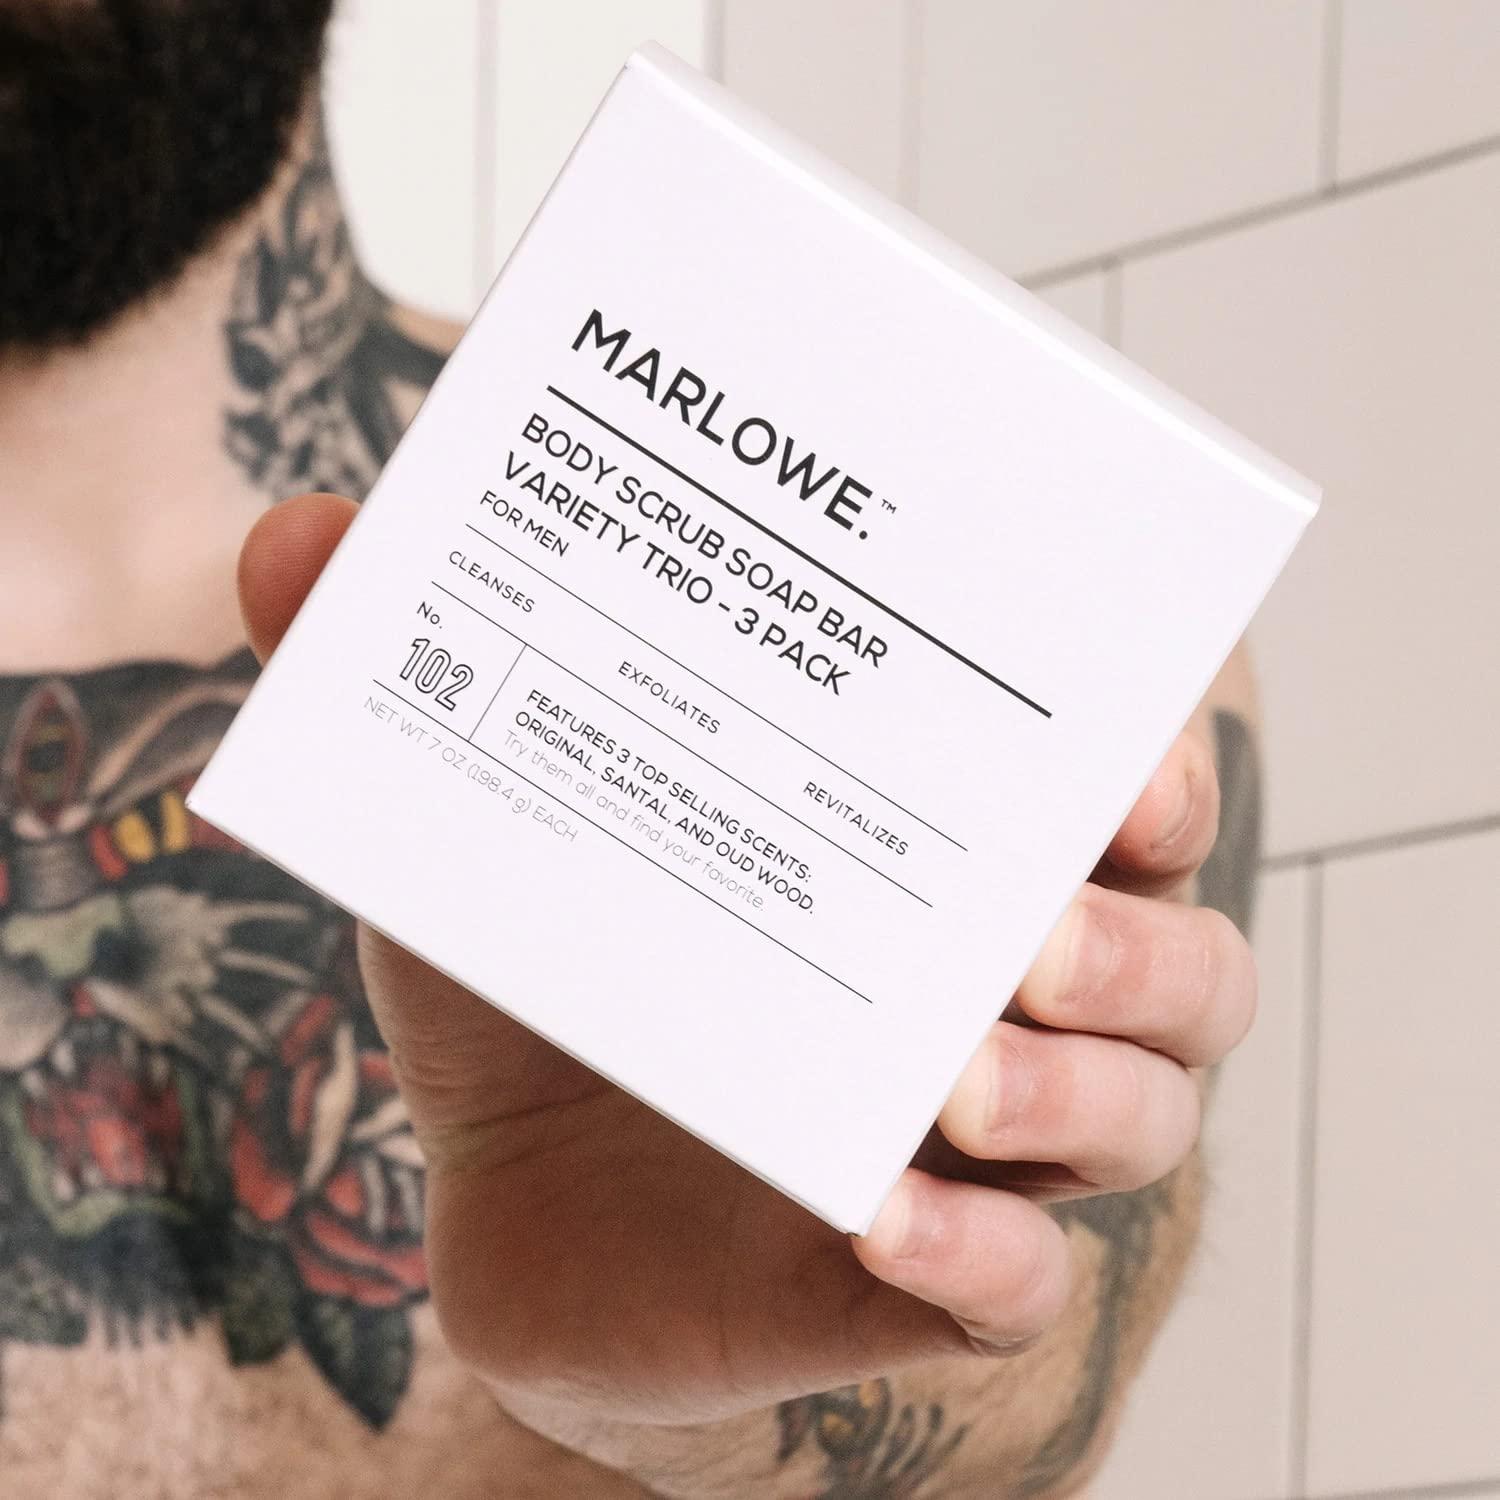 Men's Body Scrub Soap – MARLOWE Skin